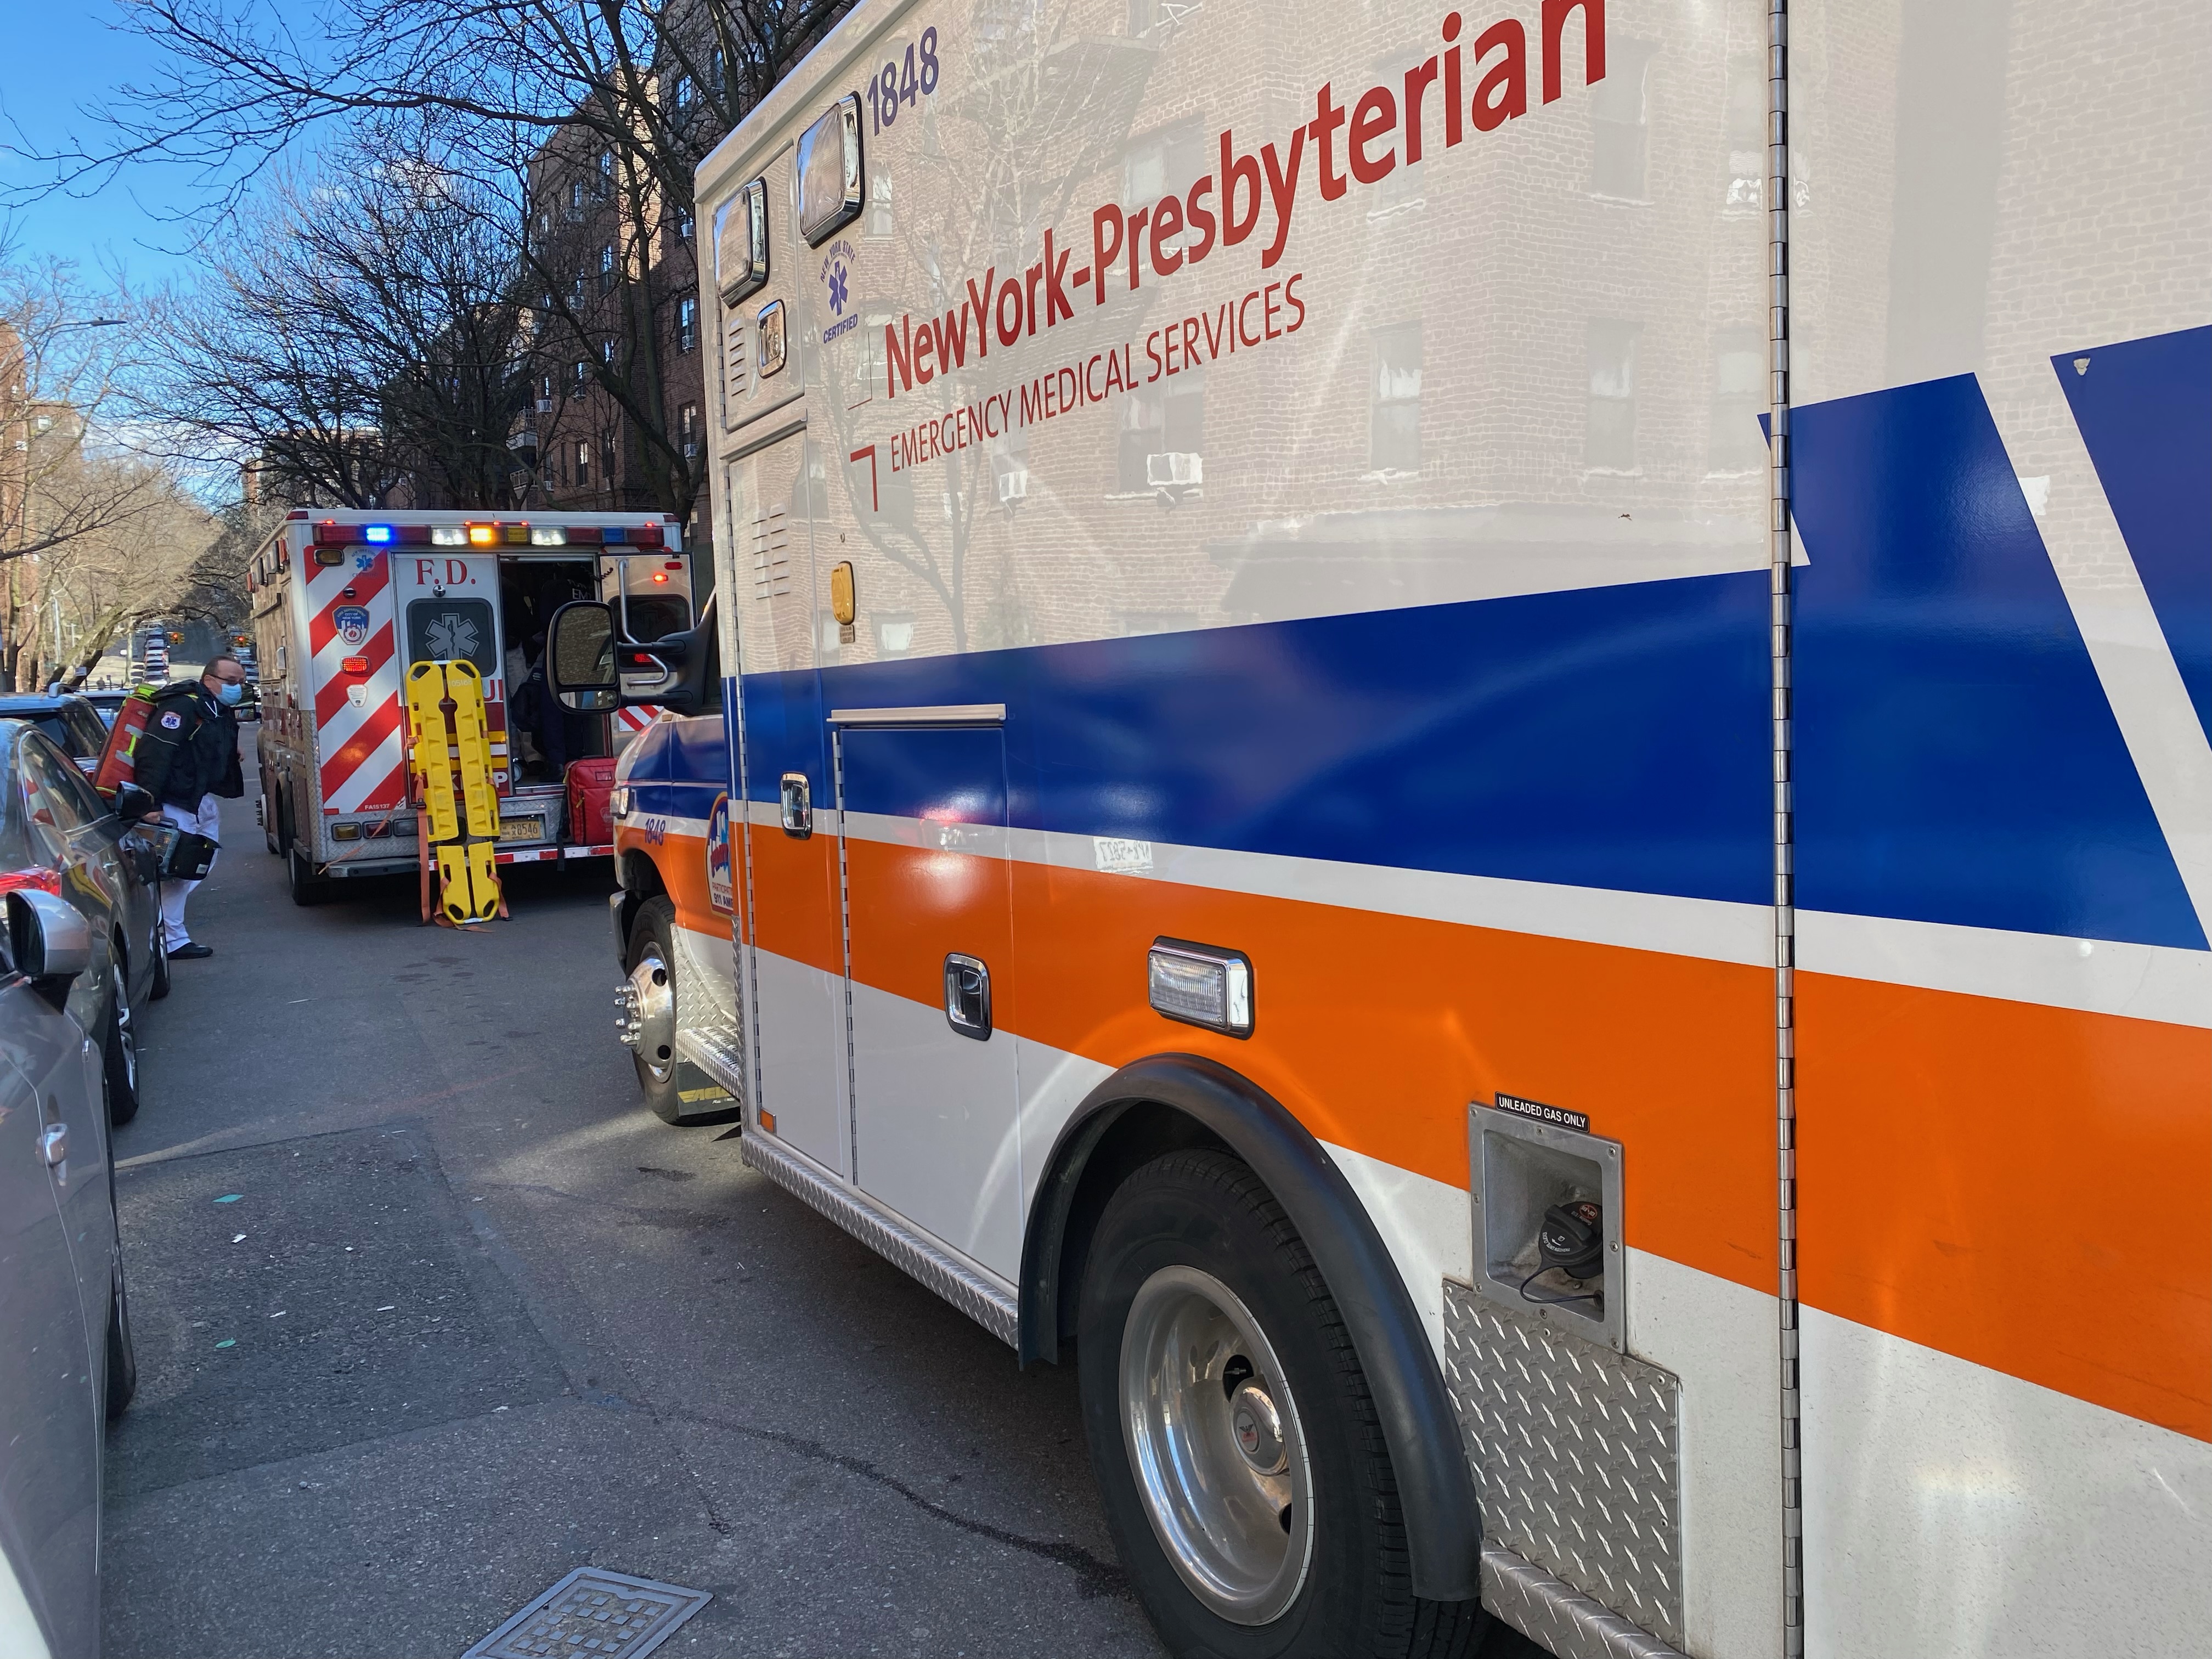 New York Presbyterian Emergency Medical Services vehicles